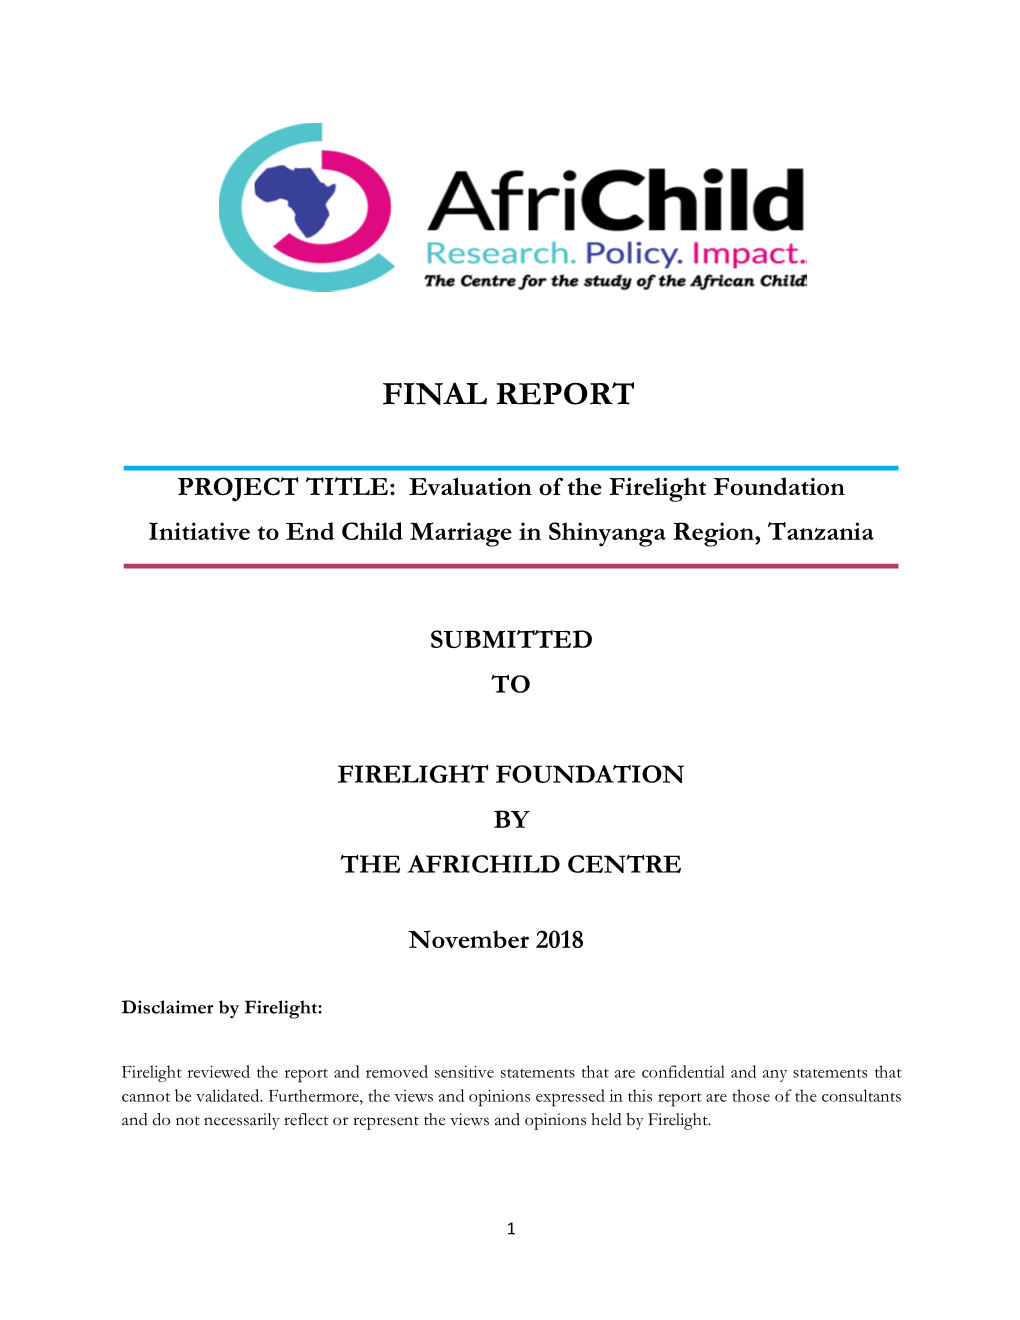 FINAL Shinyanga Firelight Evaluation Report (Shared with Grantee